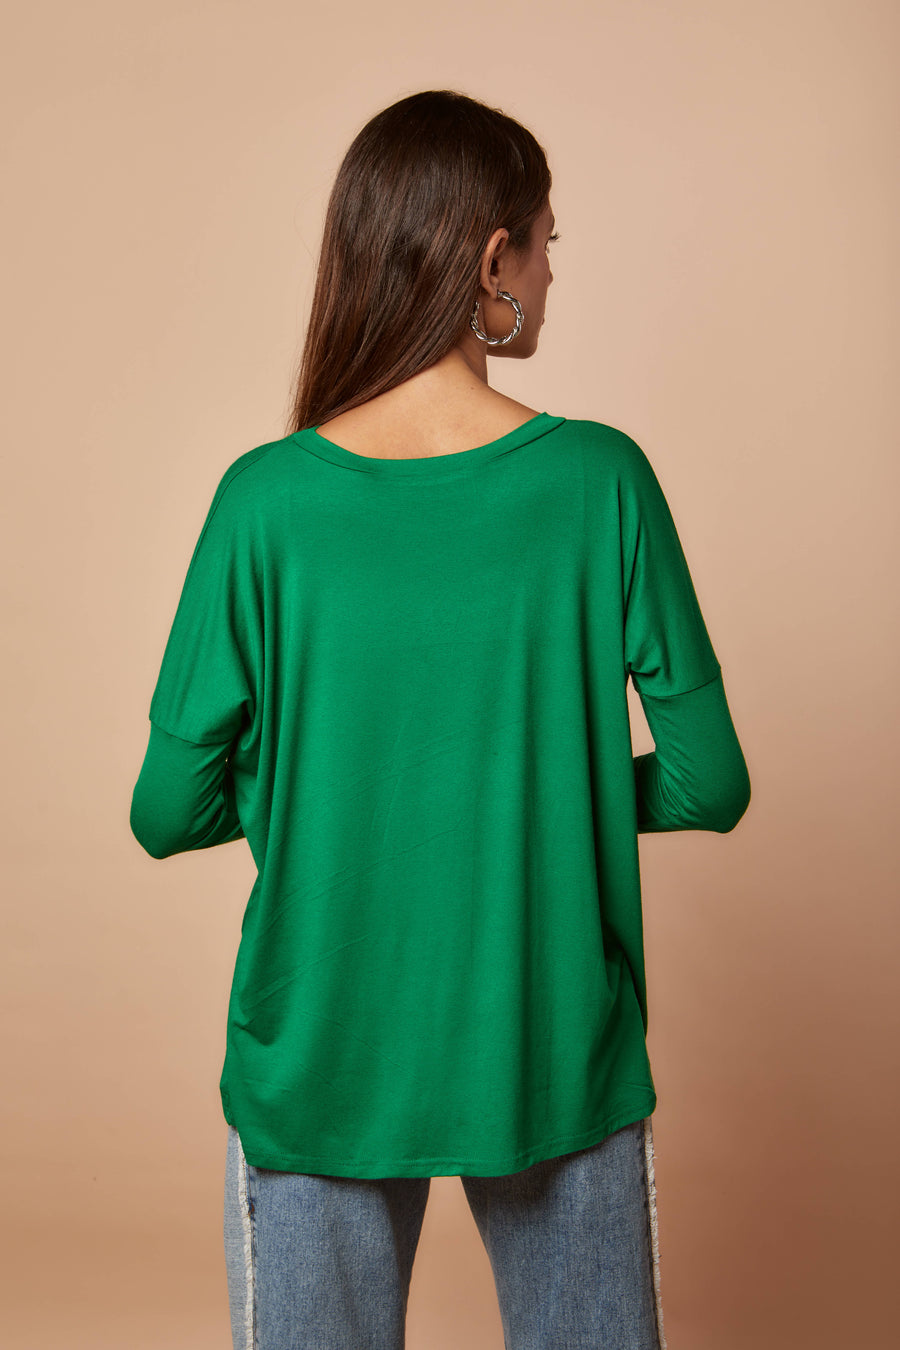 Basic Green Square-cut light cotton Top